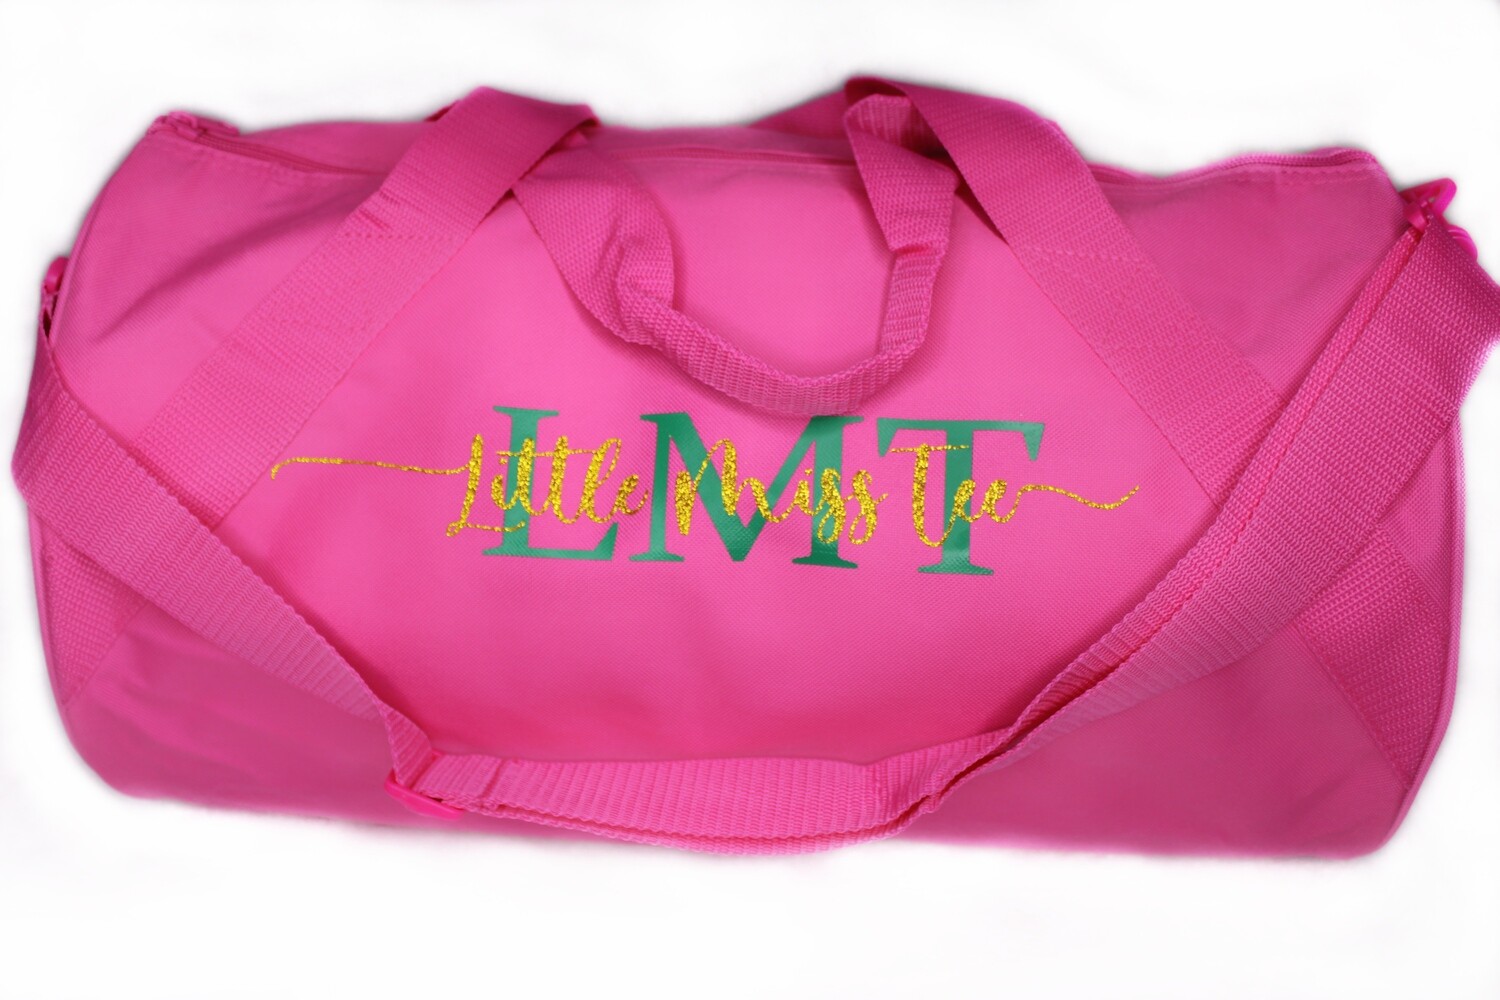 Little Miss Tee Overnight Bag (Pink) $28